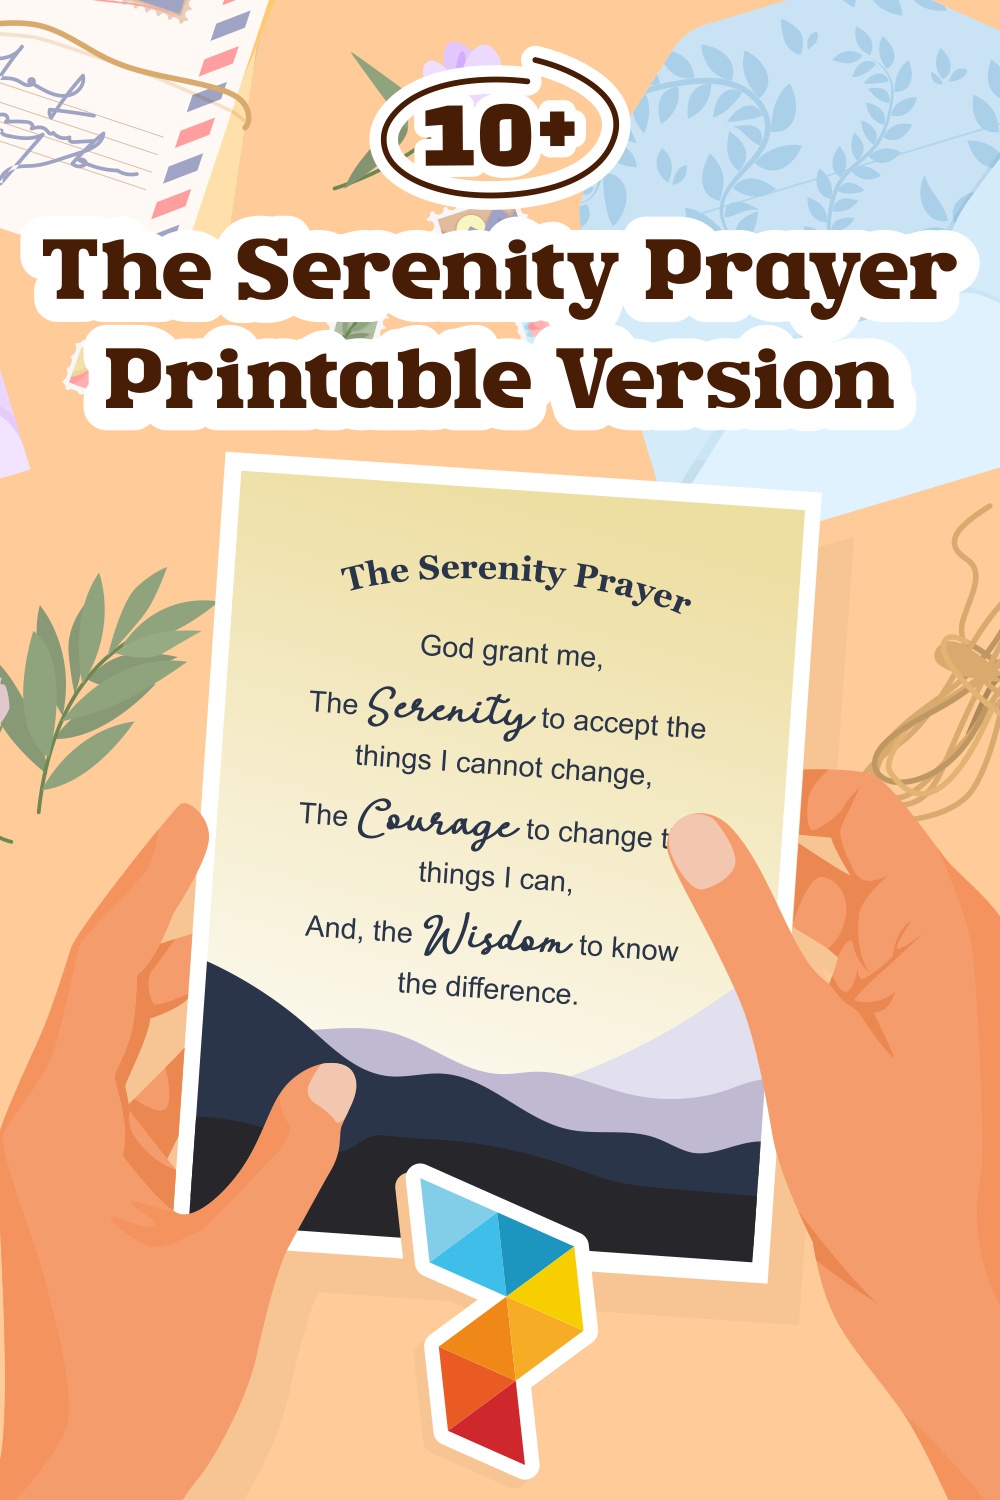 The Serenity Prayer Version